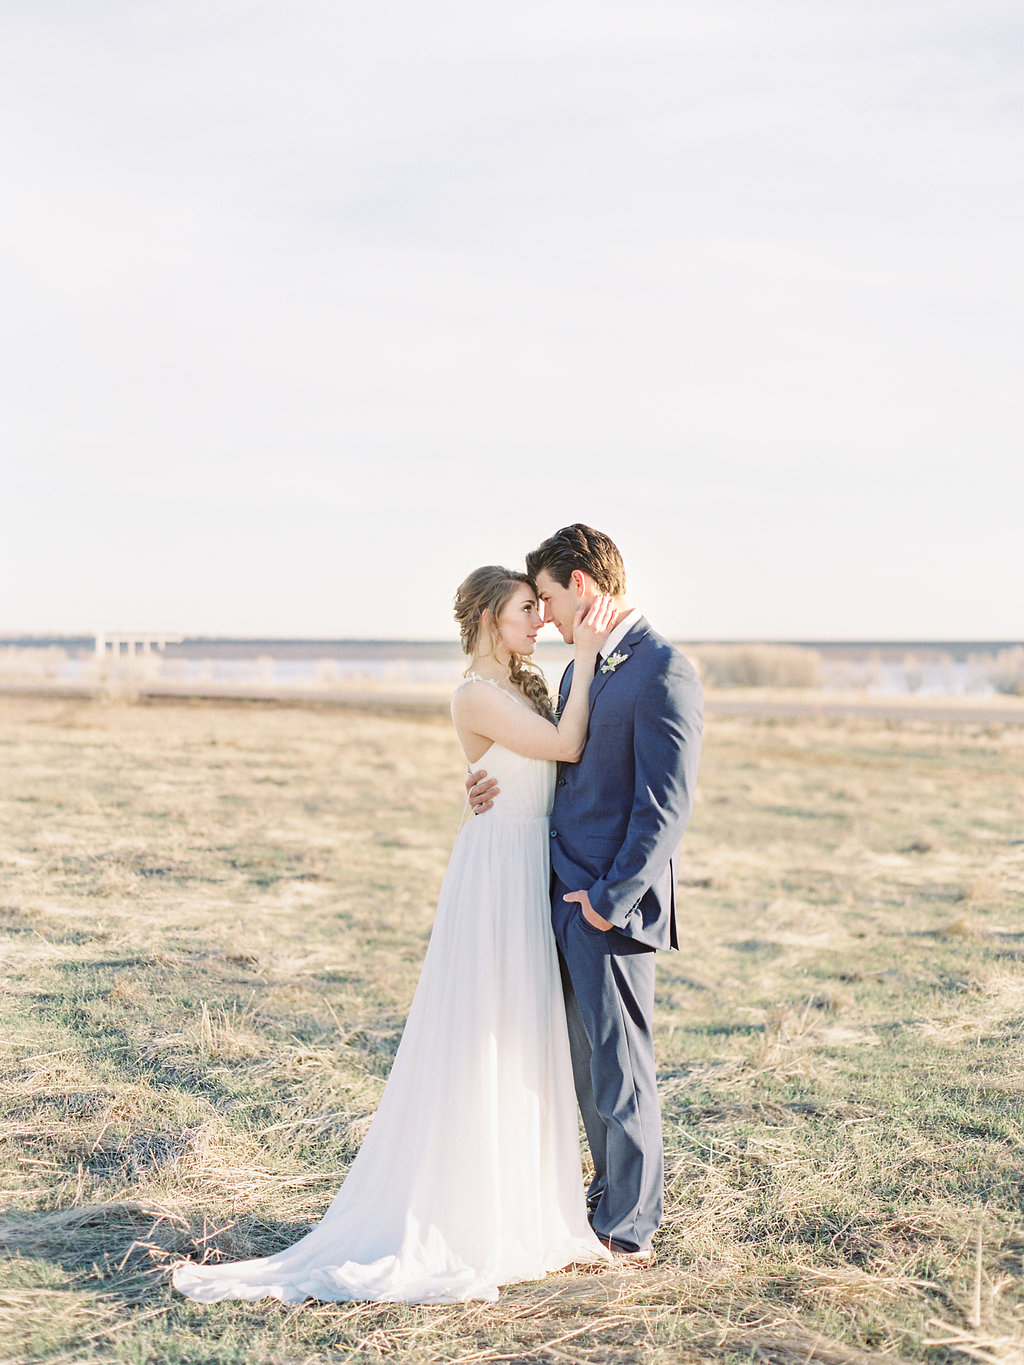 Fine Art Wedding Invitation Designs | Colorado Sunrise Elopement Inspiration | Sarah Ann Design